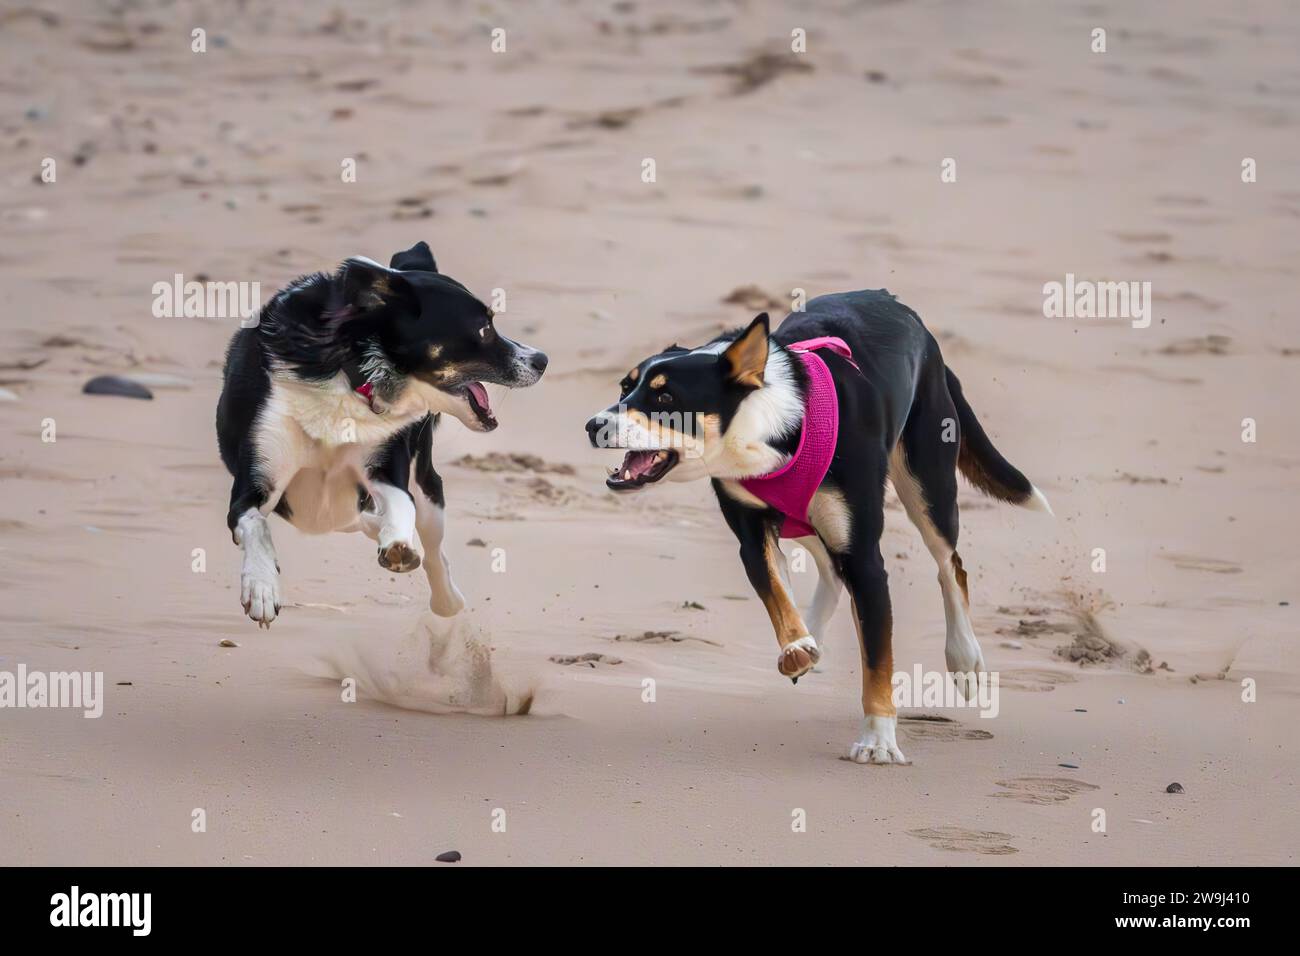 Medium size dog hi-res stock photography and images - Alamy